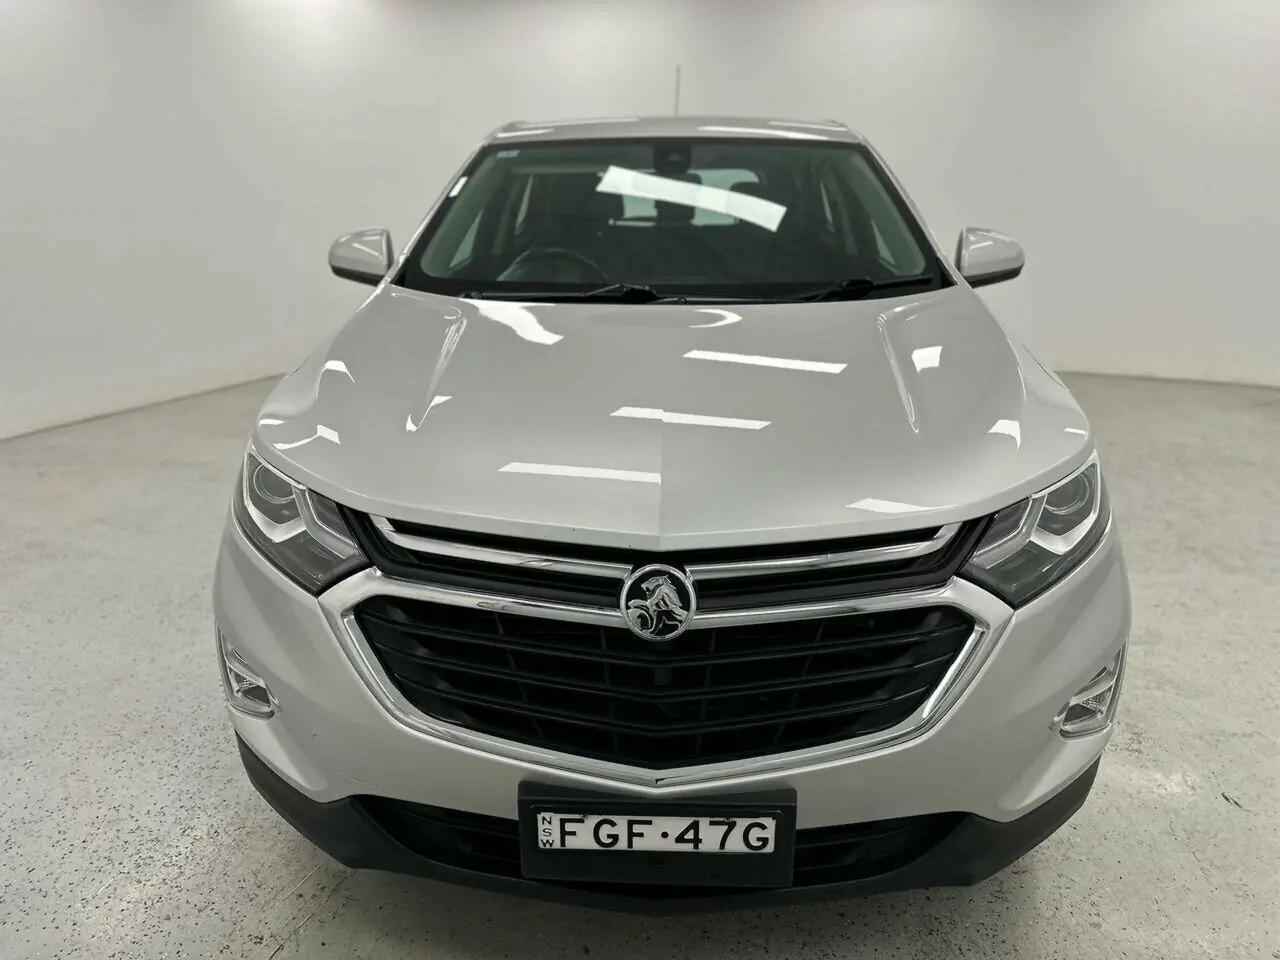 2019 Holden Equinox Image 2